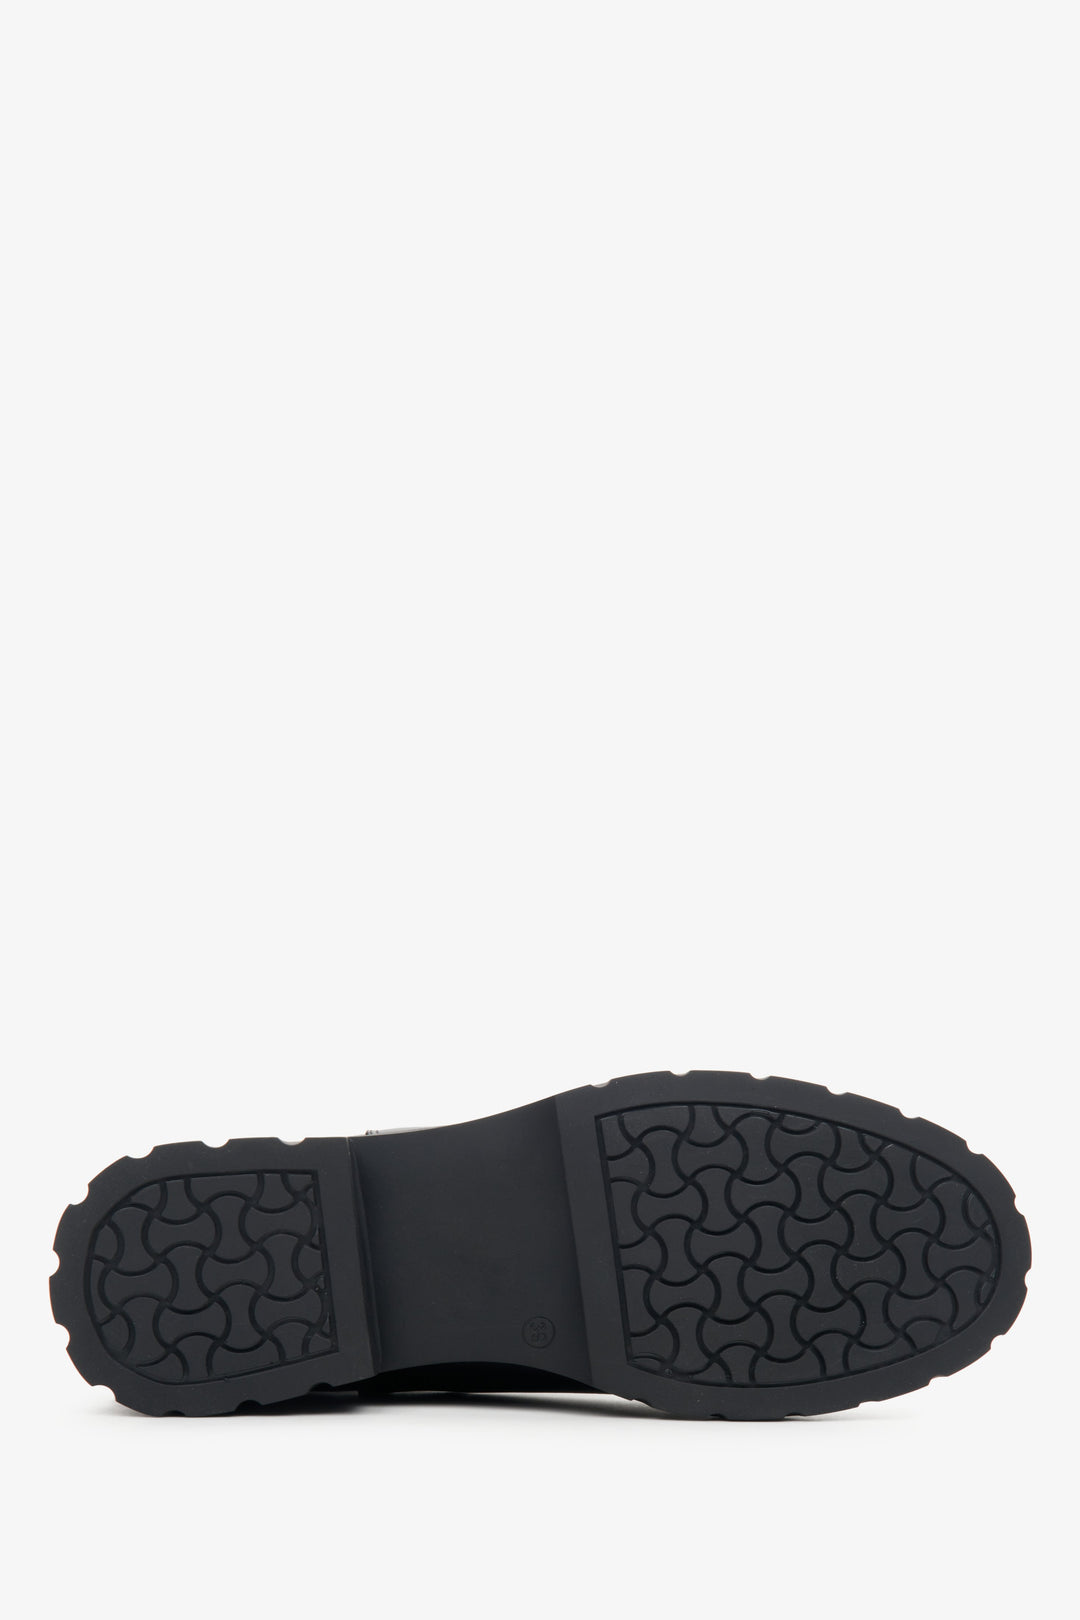 Women's black Estro Chelsea boots - close-up on the sole.